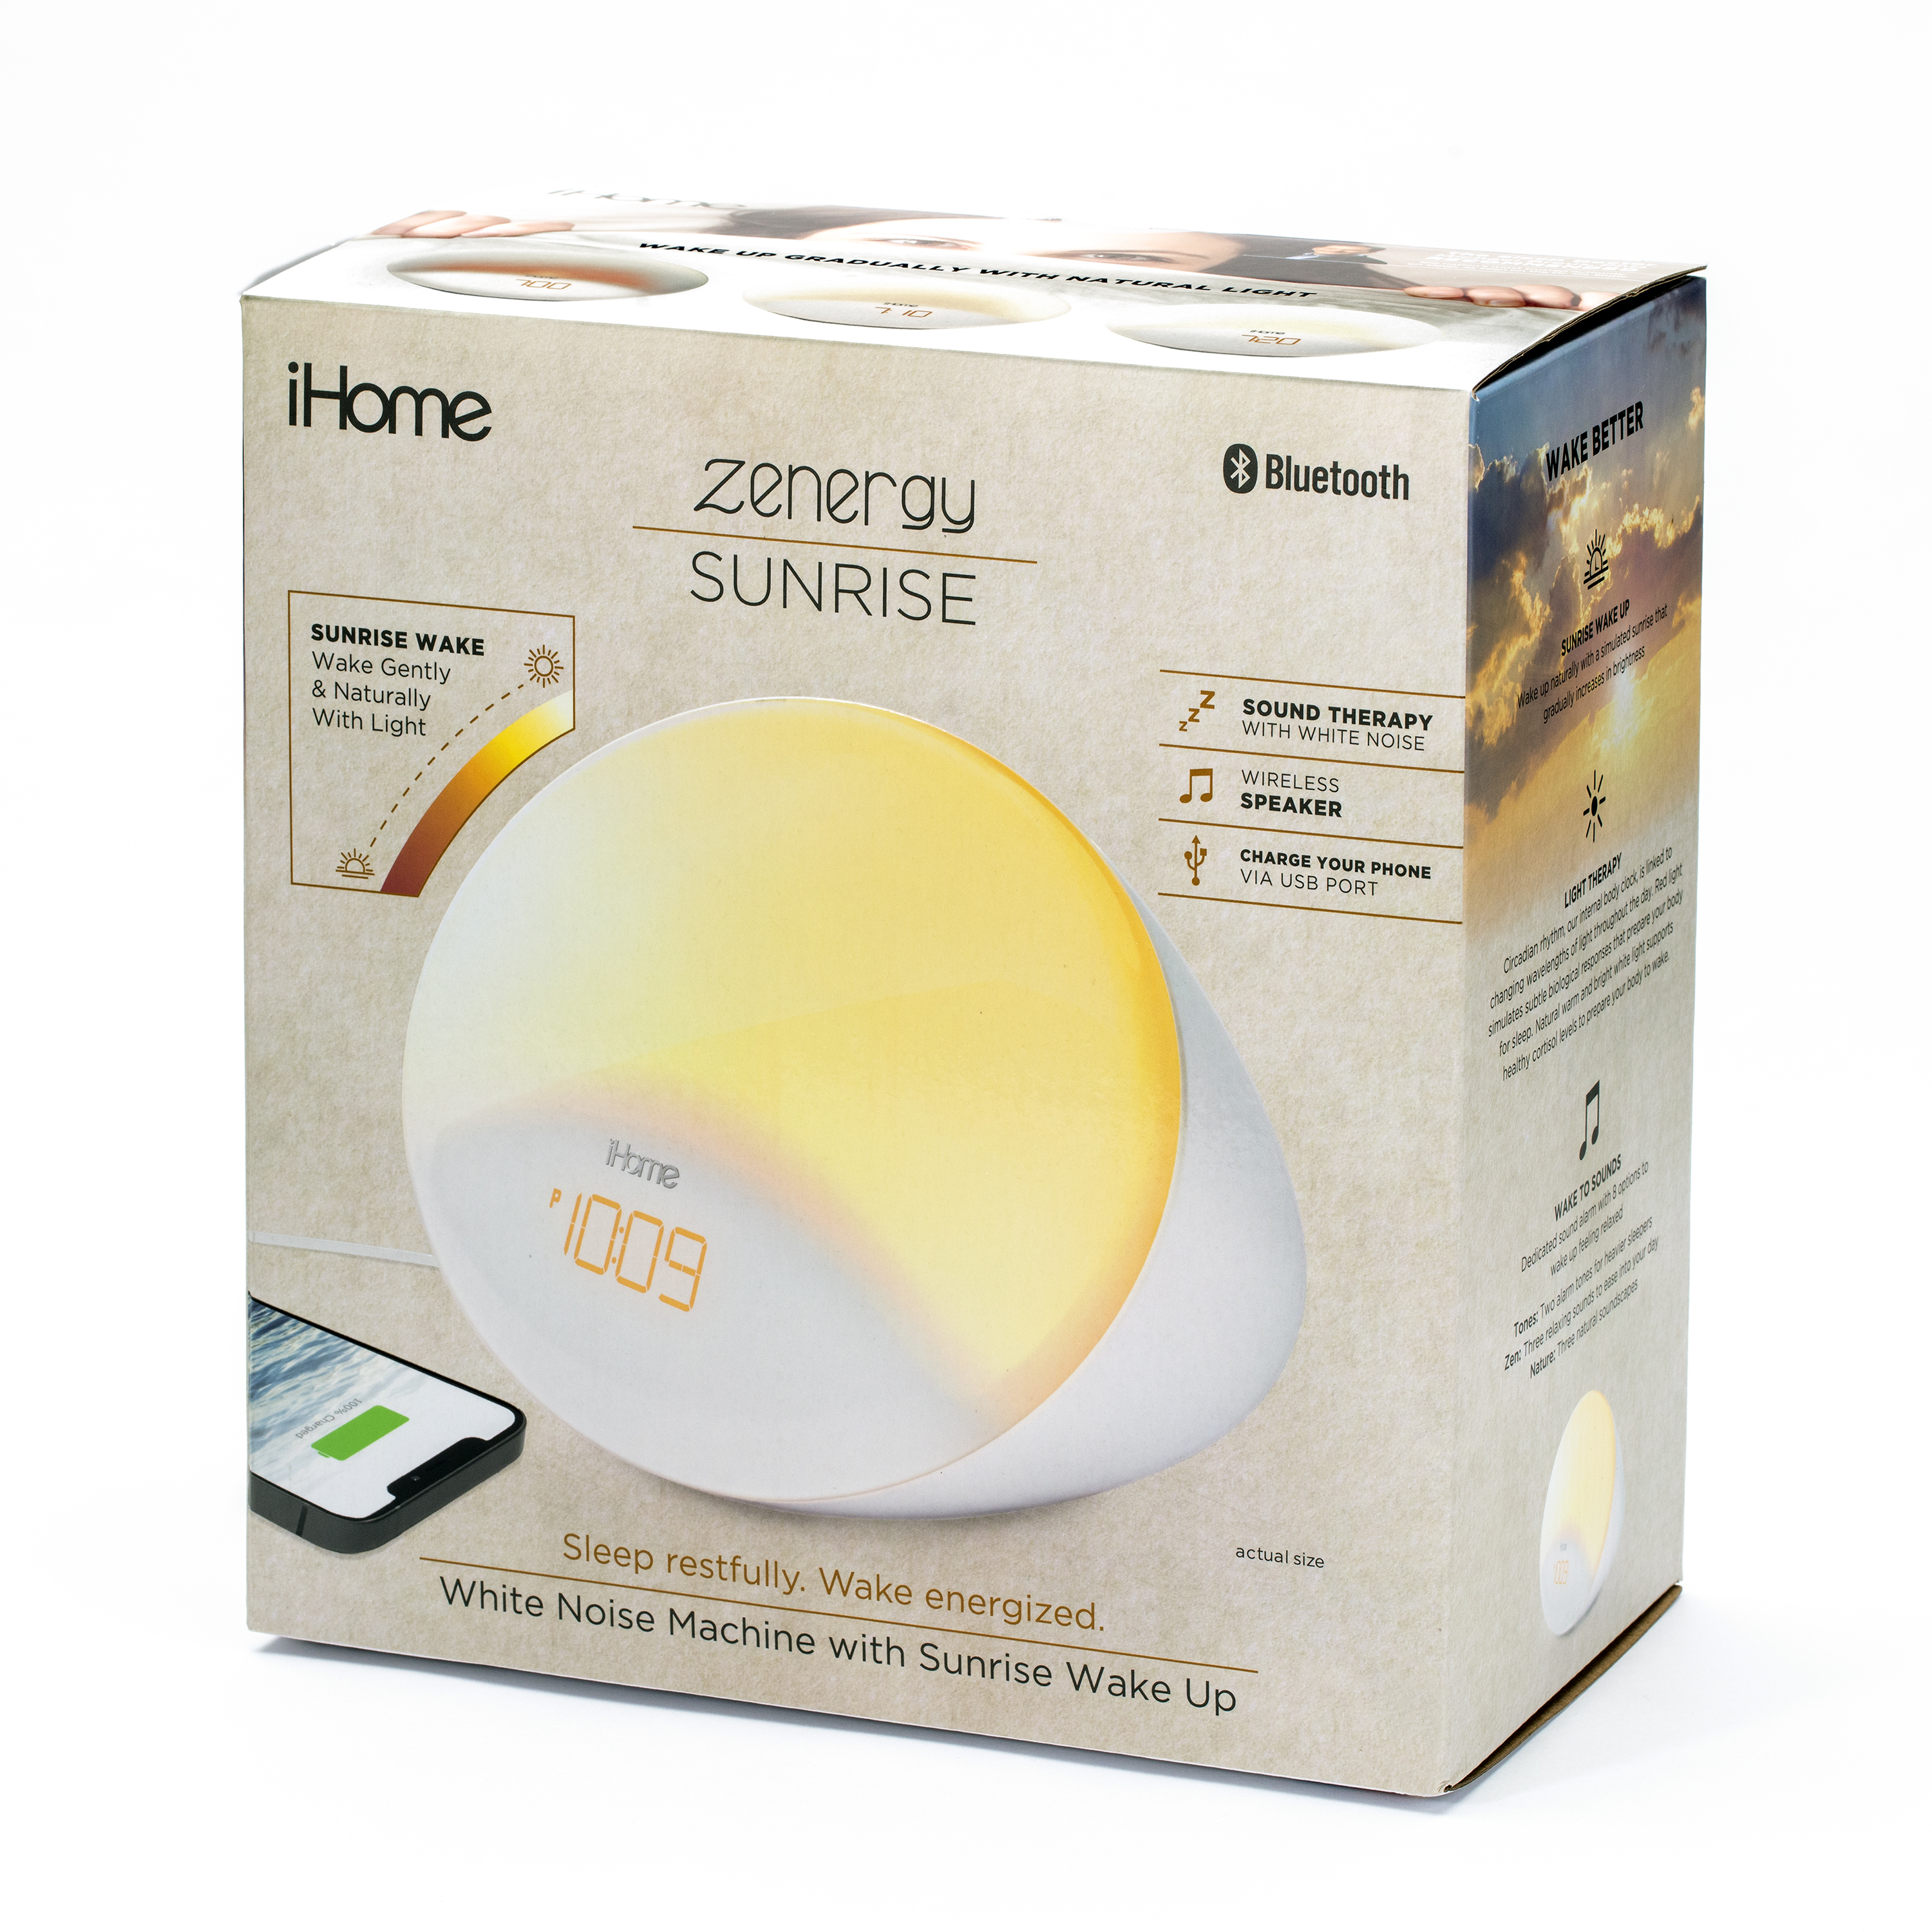 iHome Zenergy iZBT3 Bedside Sleep Therapy Machine with Bluetooth Speaker, Sunrise Wakeup and USB Charging - image 3 of 20